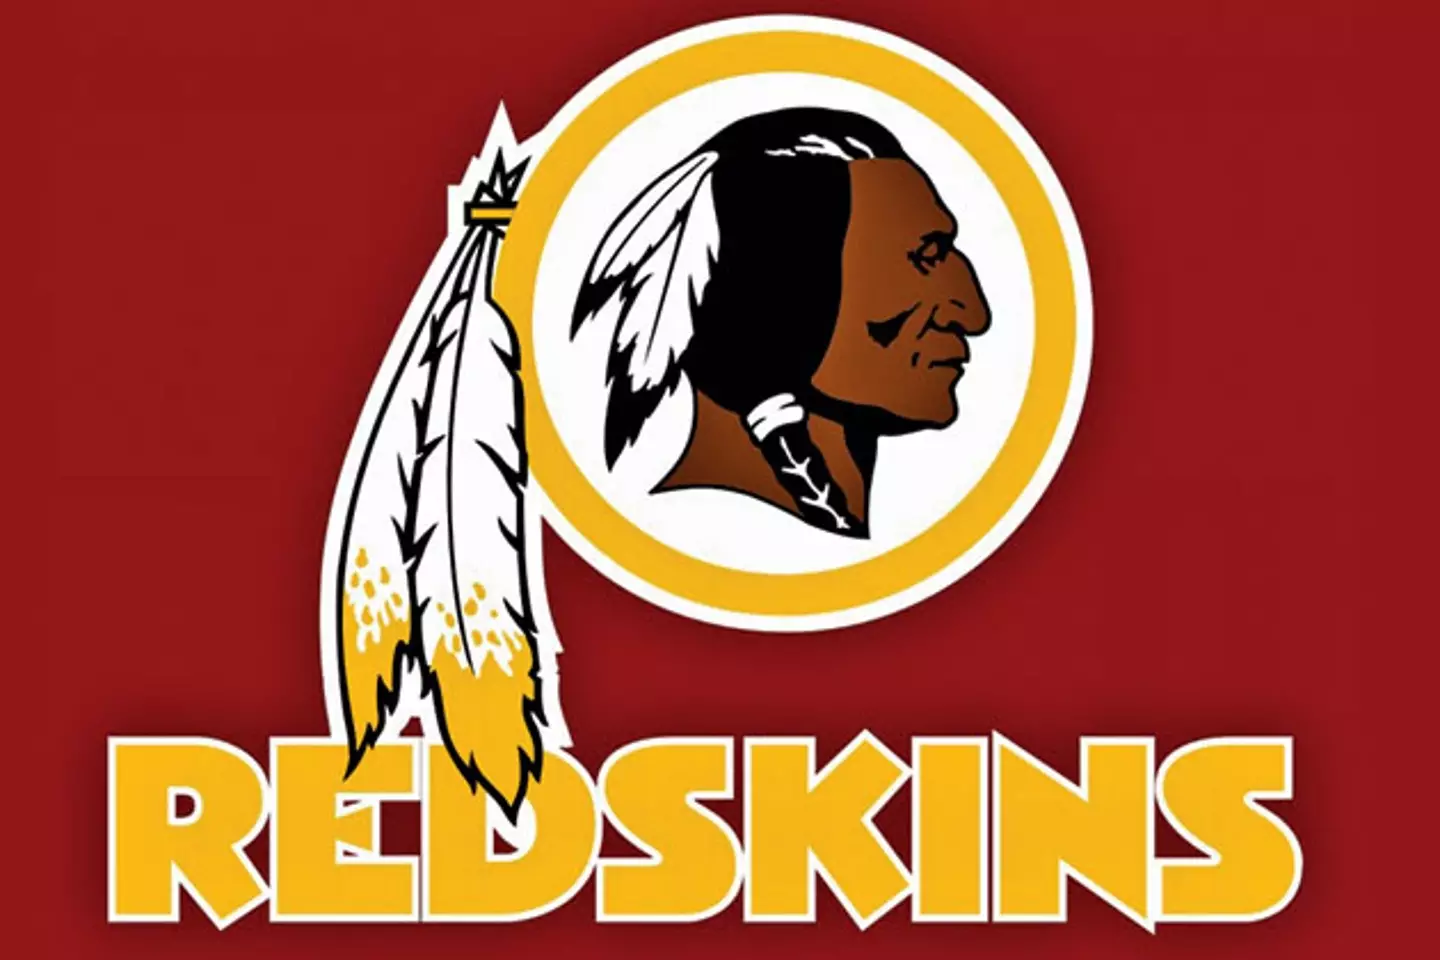 Native American Guardians Association (NAGA) is calling for the Washington Commanders to reclaim their original Washington Redskins name.